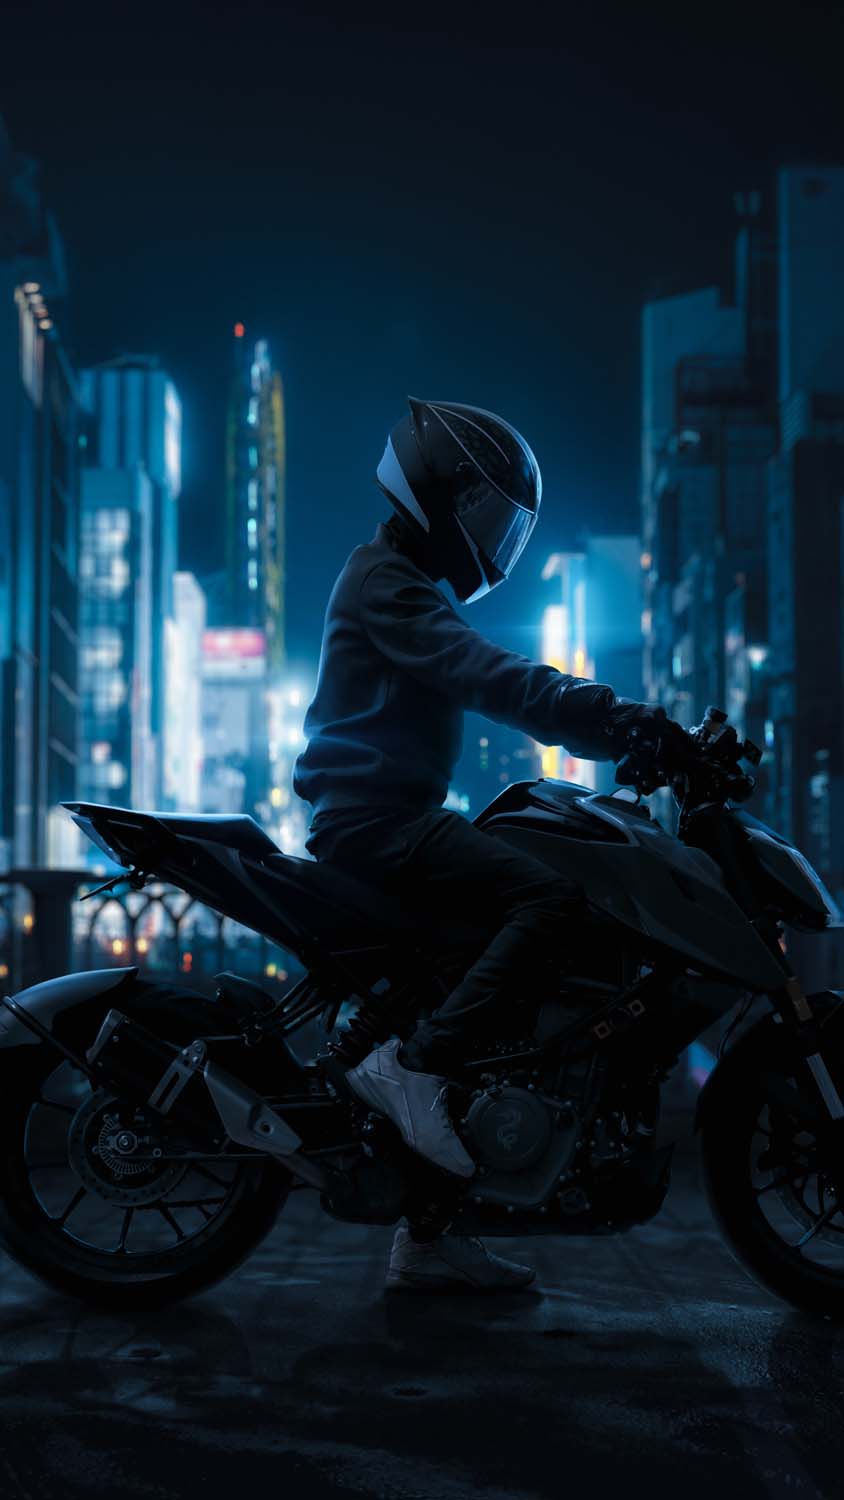 Night Rider iPhone Wallpaper 4K